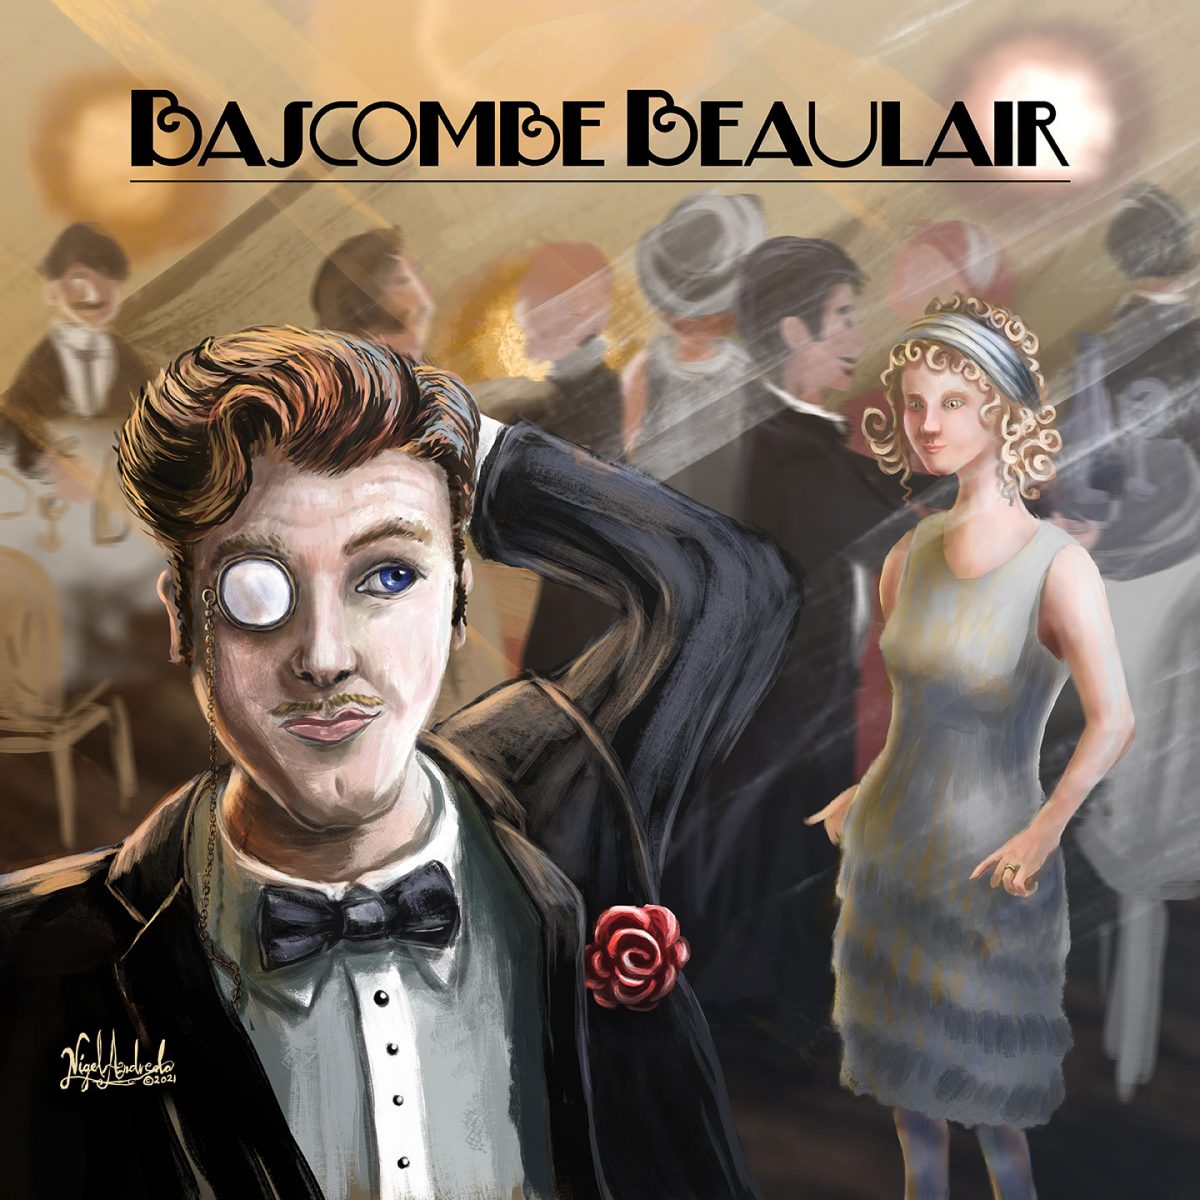 Bascombe Beaulair album cover art by Nigel Andreola